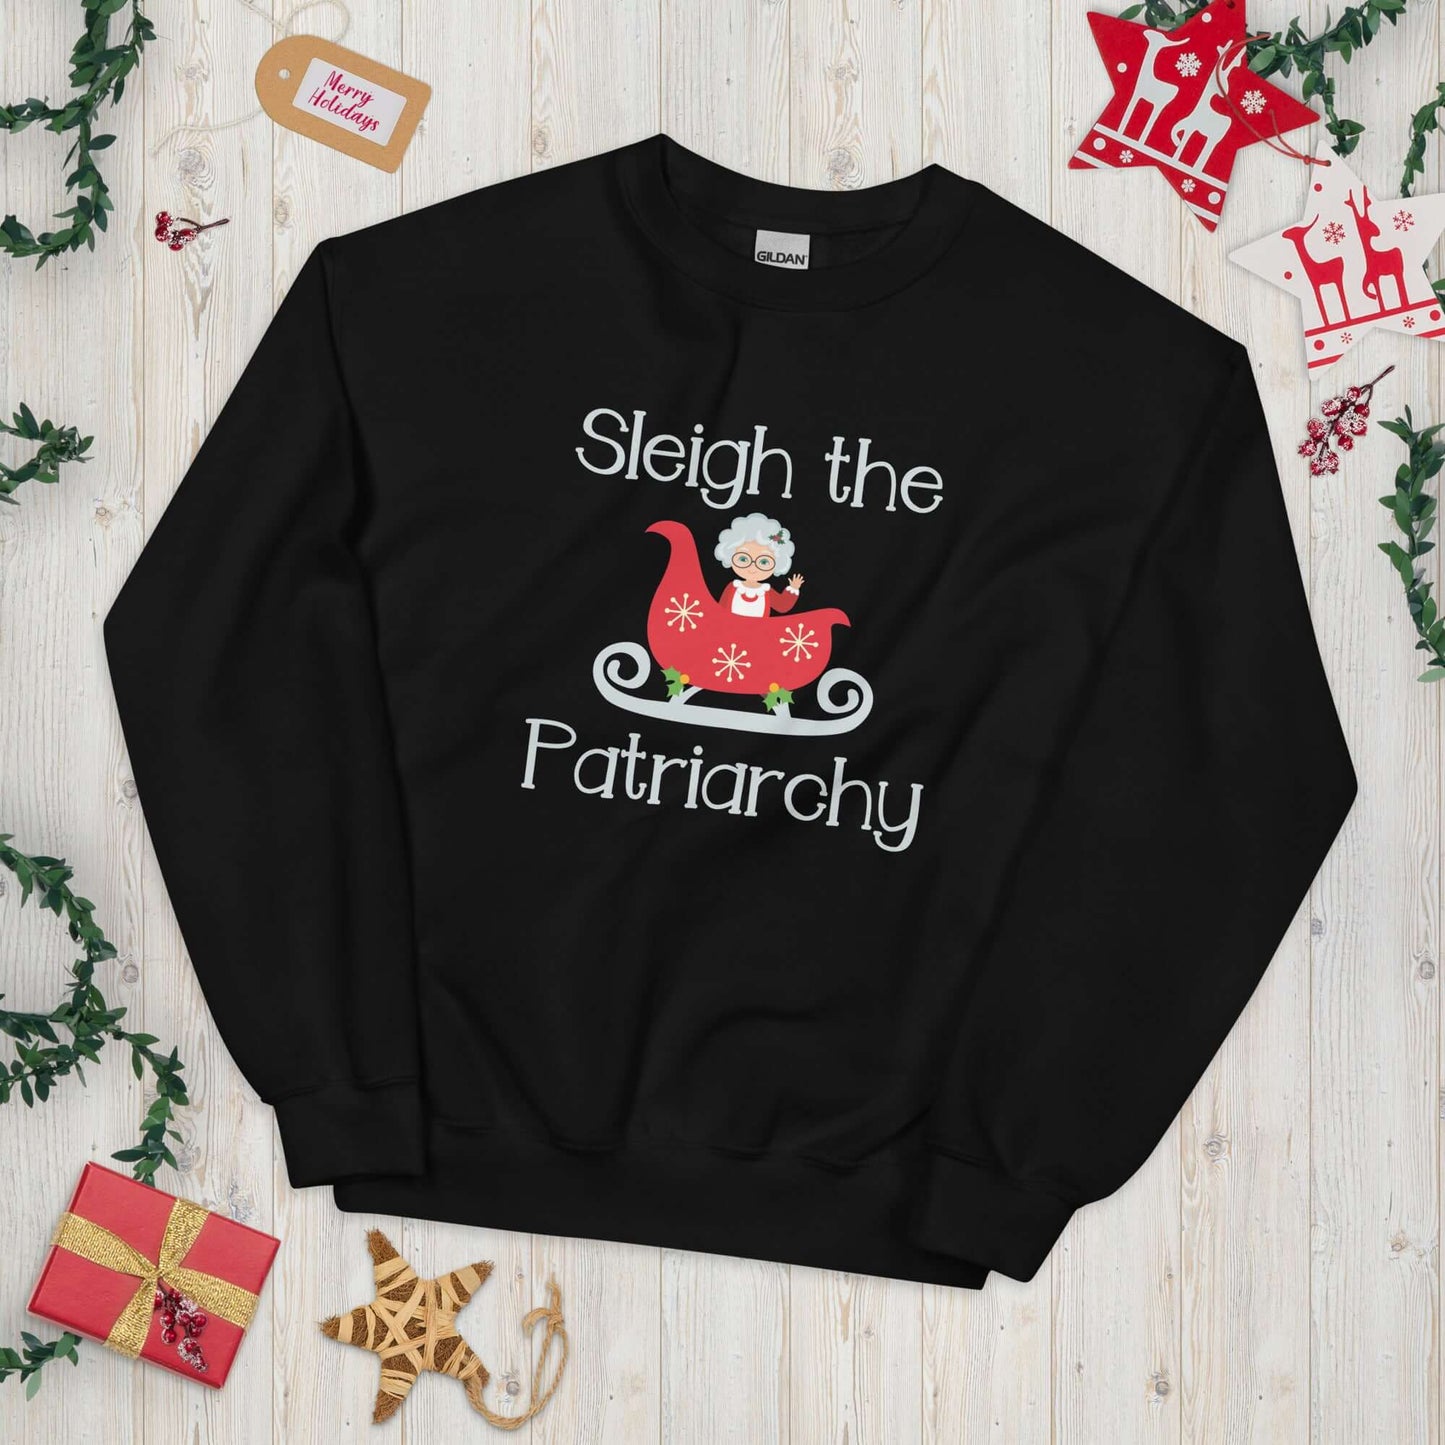 Sleigh the Patriarchy crewneck sweatshirt. Christmas sweater.